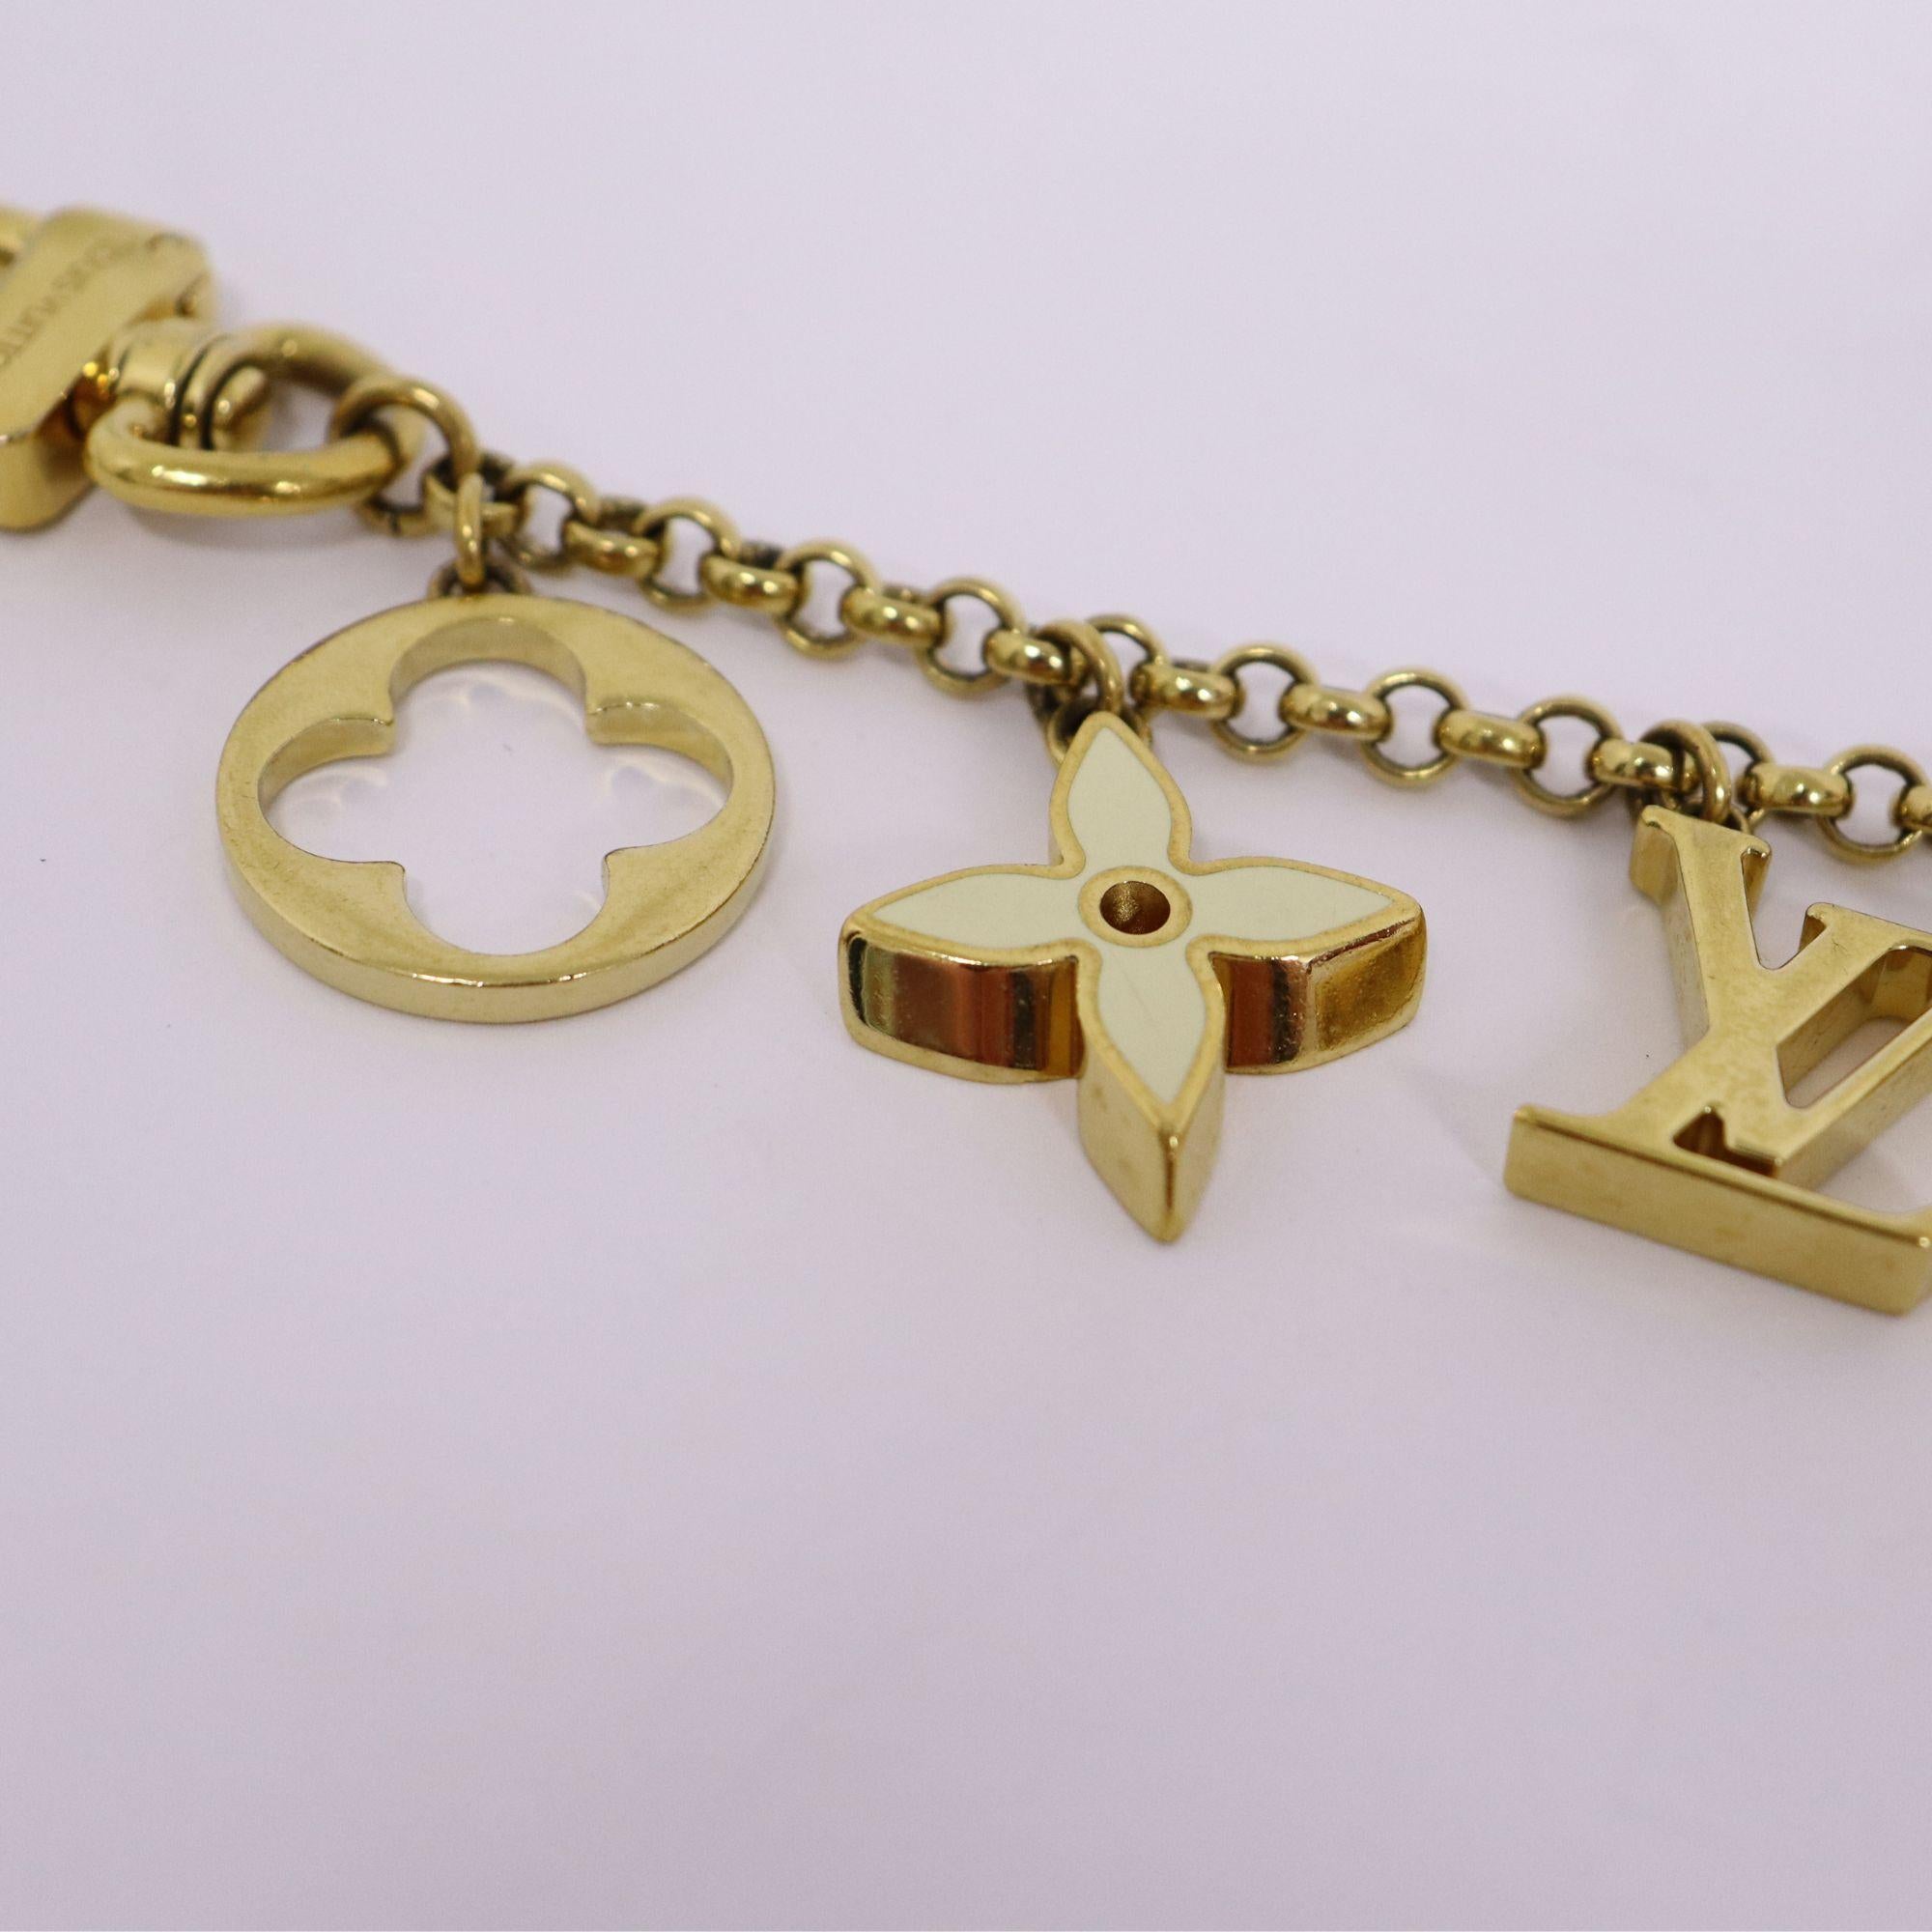 Louis Vuitton Fleur De Monogram bag charm. Monogram with beige and ivory detail.  Gold finished brass.

Full Length: 20cm
Chain Length: 12cm  
 

